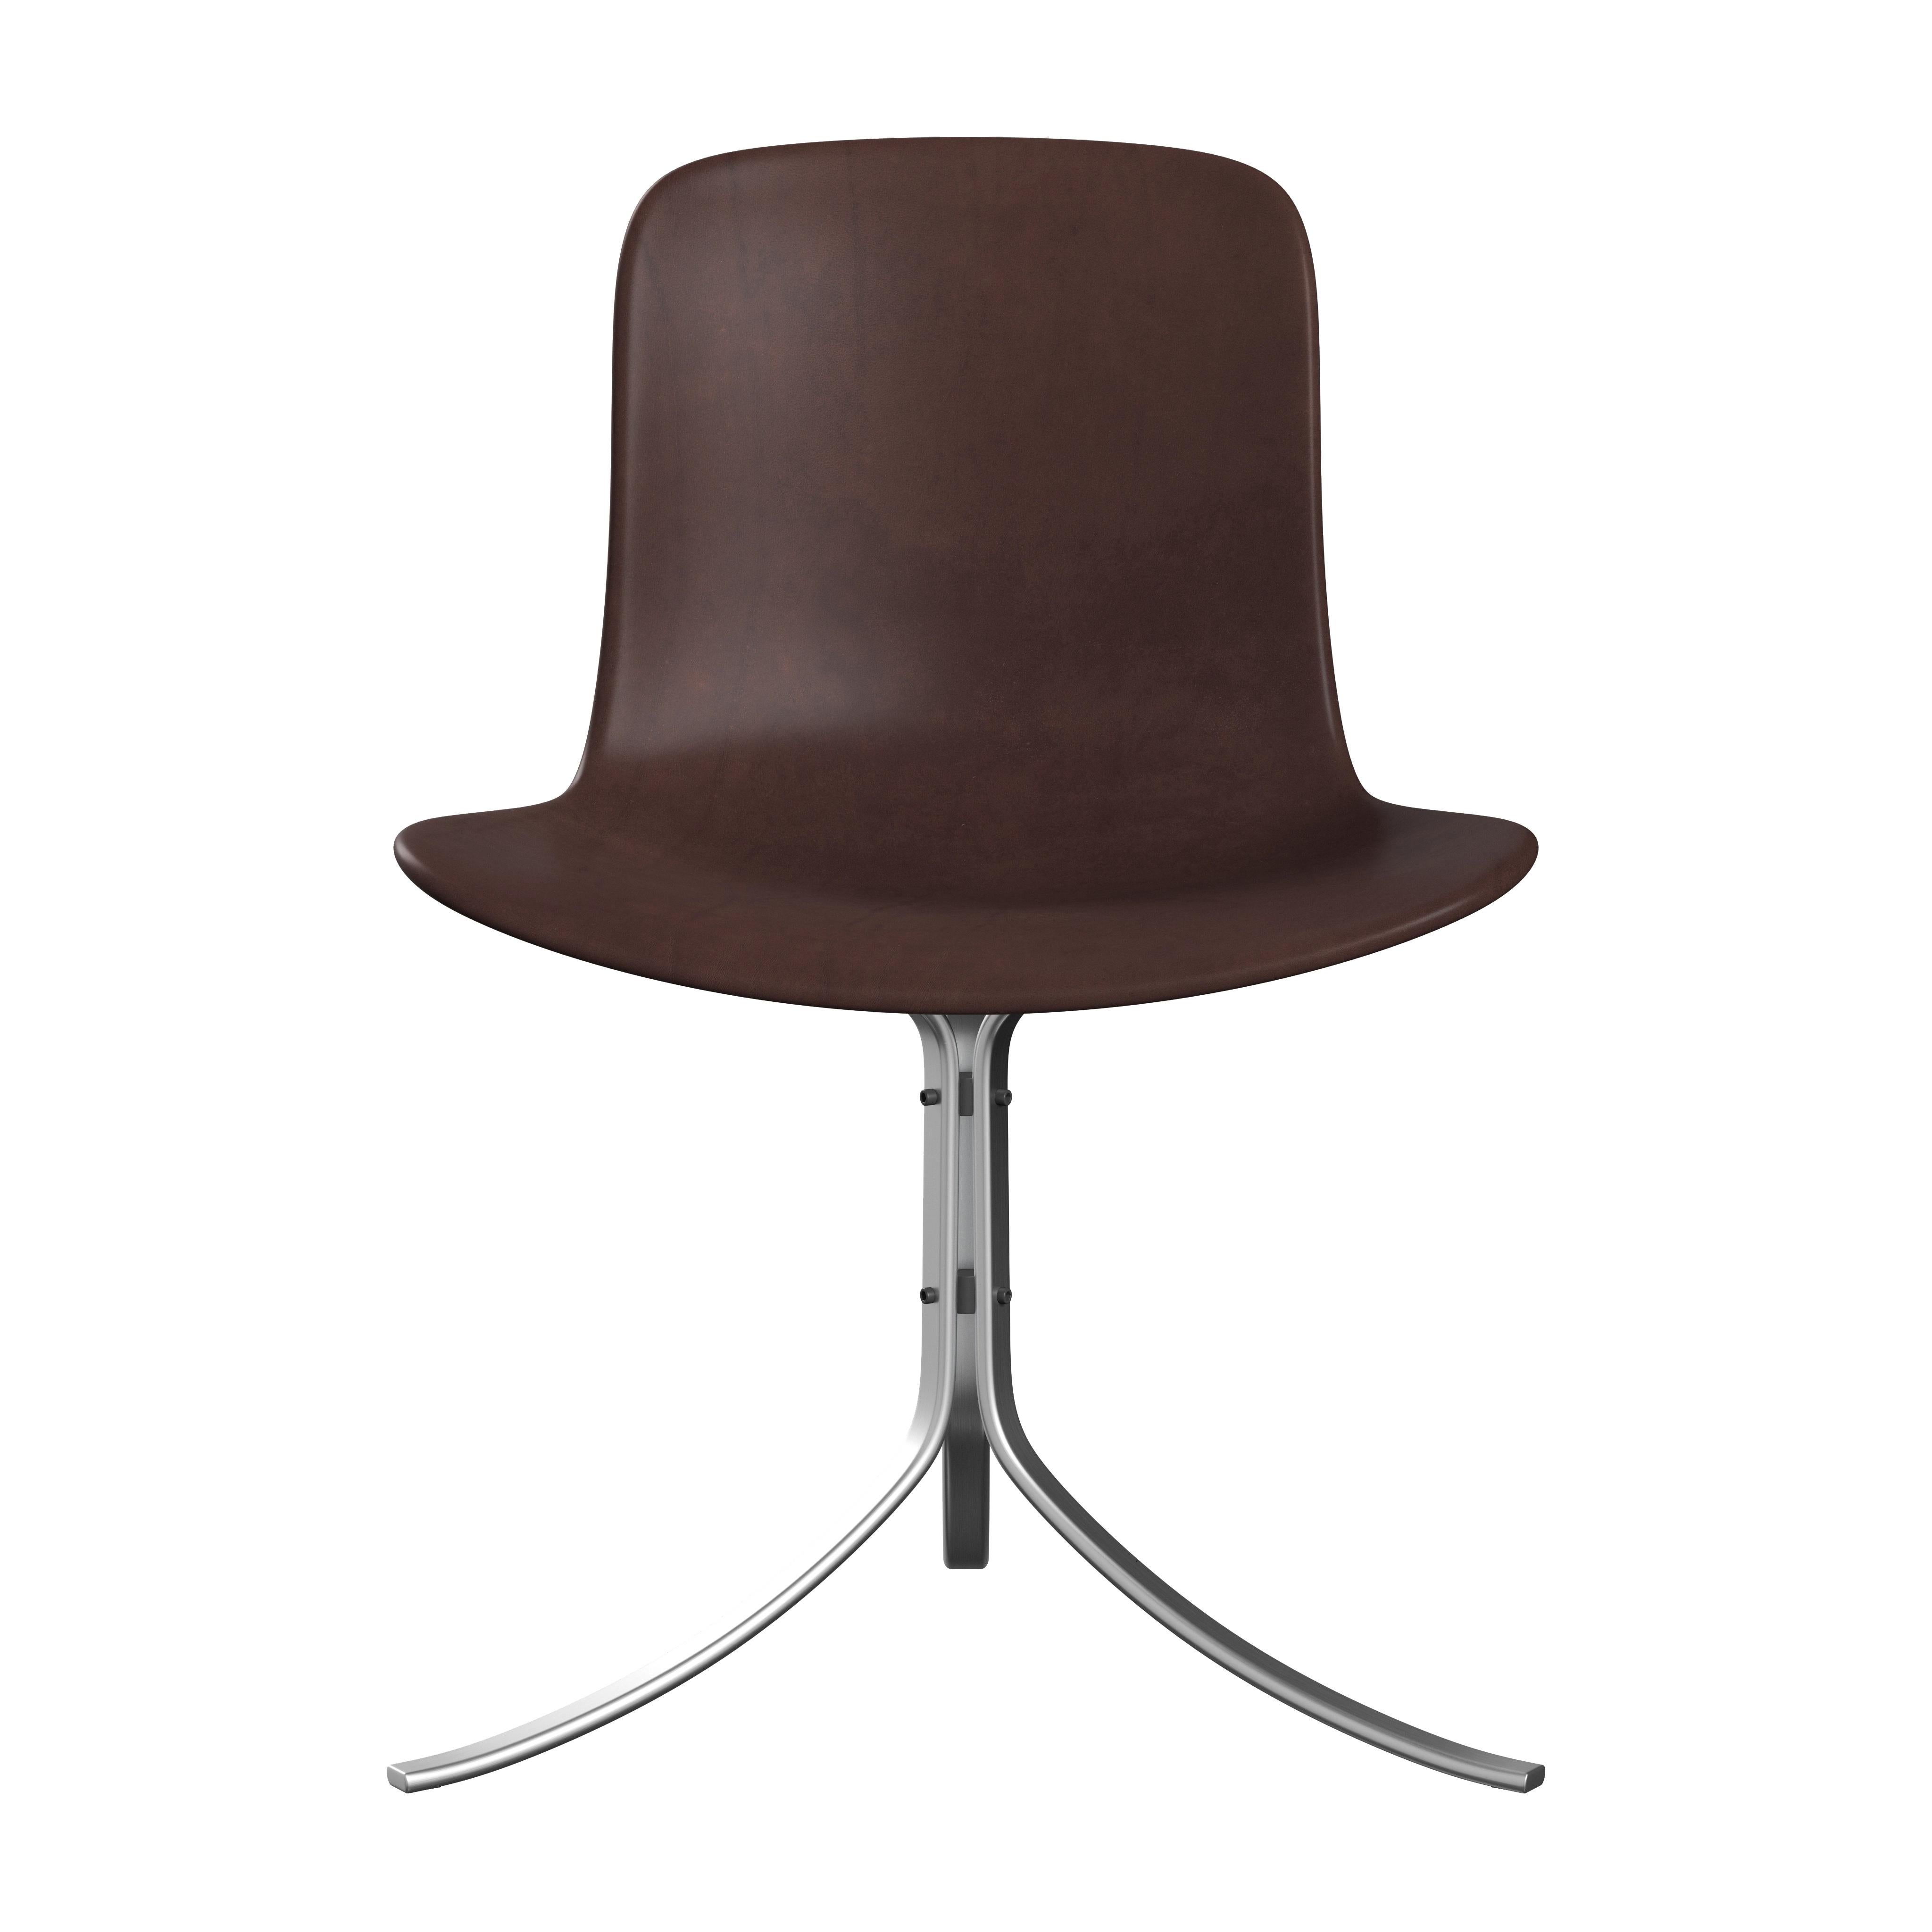 Poul Kjærholm 'PK9' Dining Chair for Fritz Hansen in Leather (Cat. 5) For Sale 5